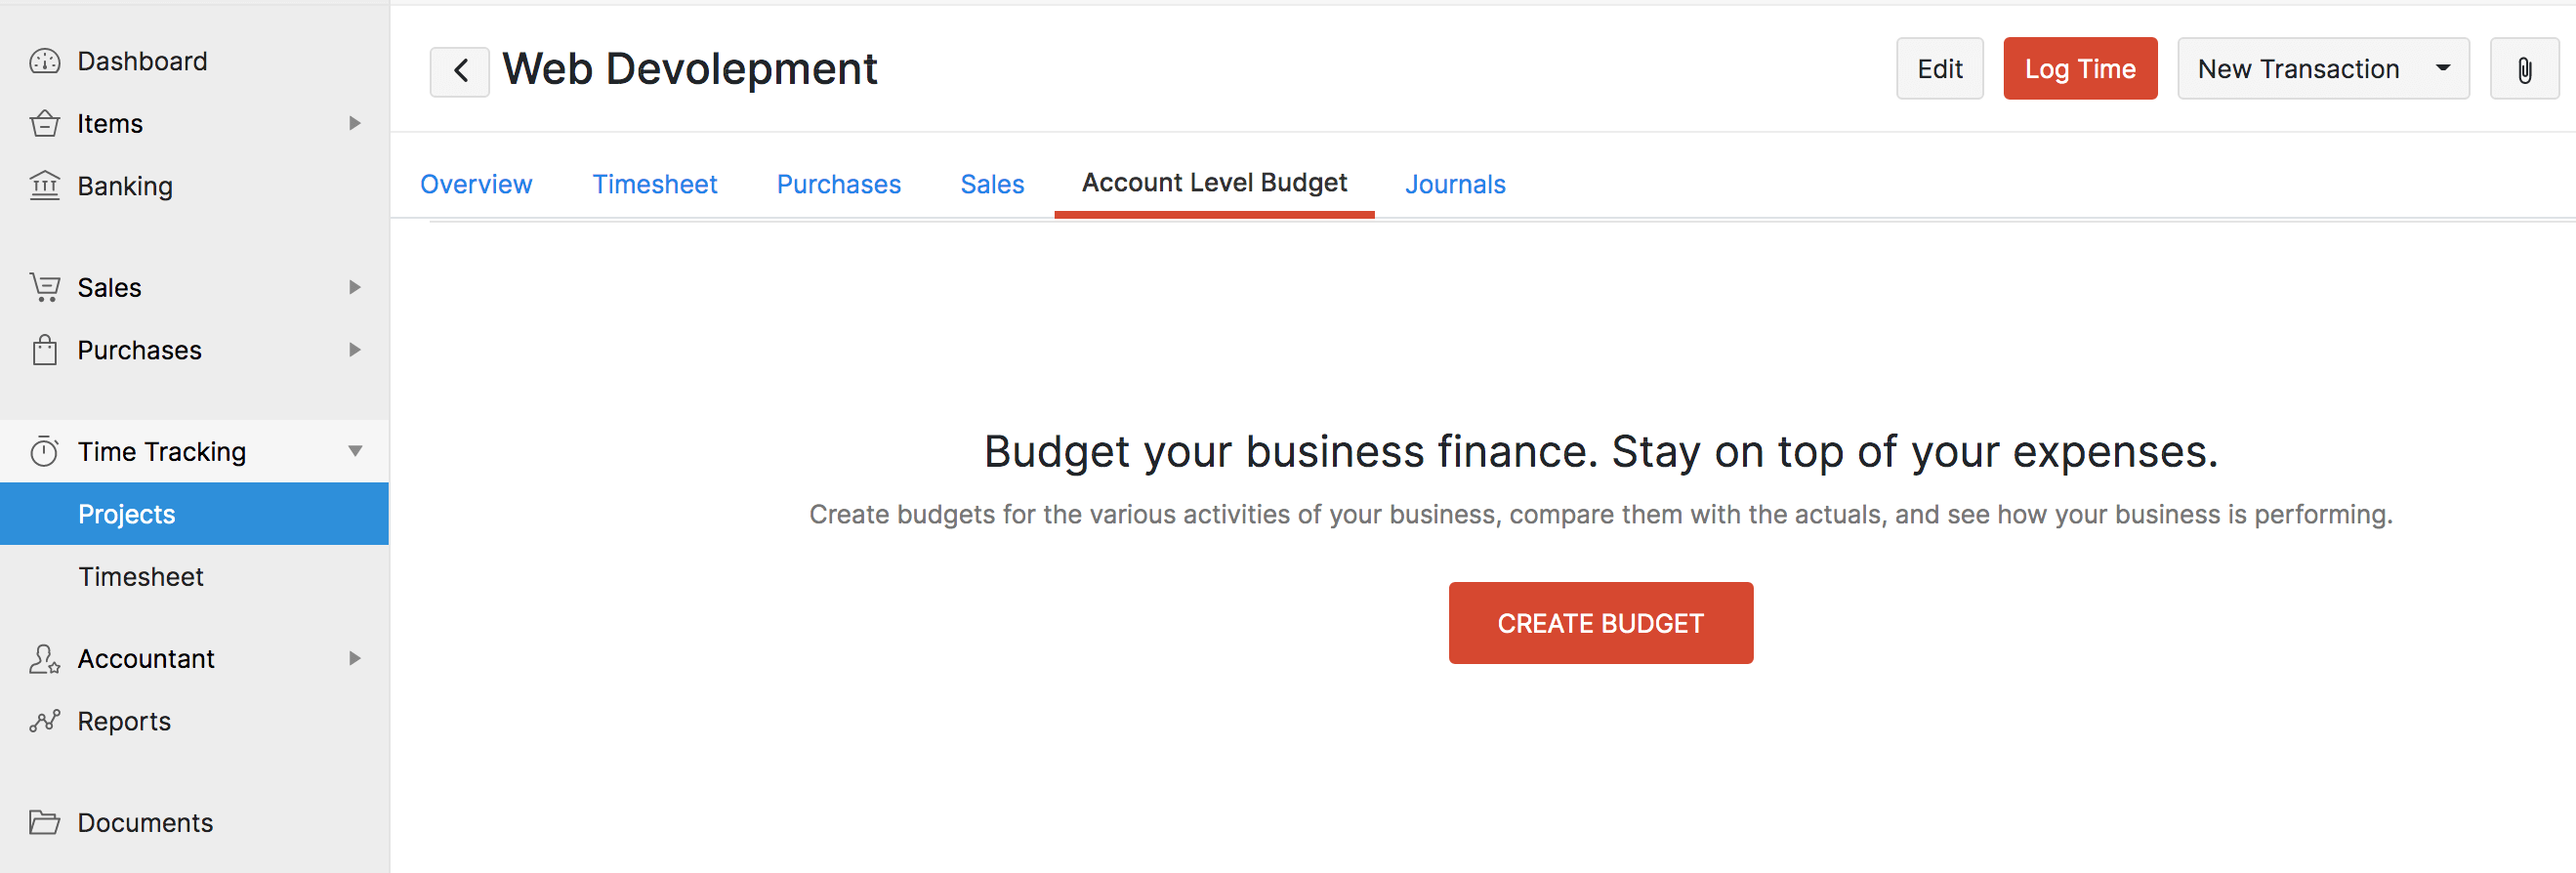 Create New Budget